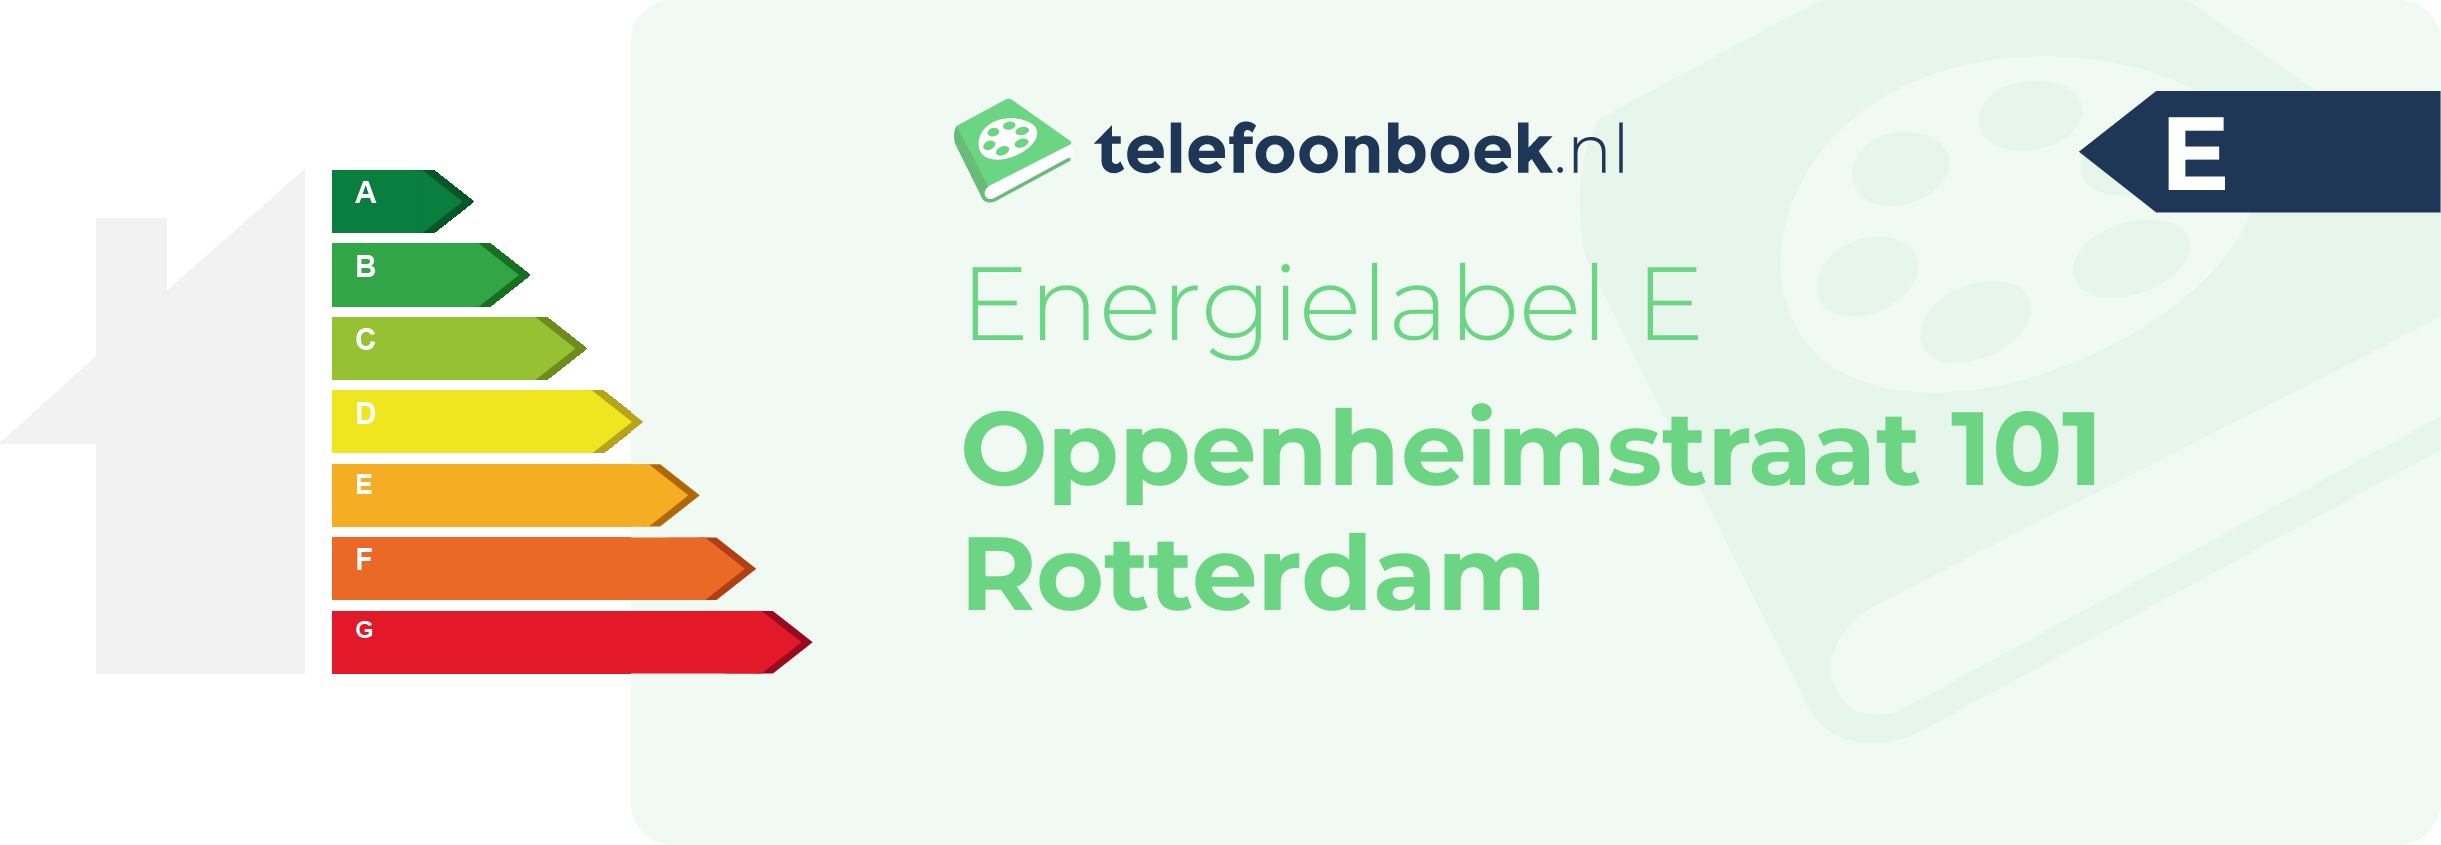 Energielabel Oppenheimstraat 101 Rotterdam